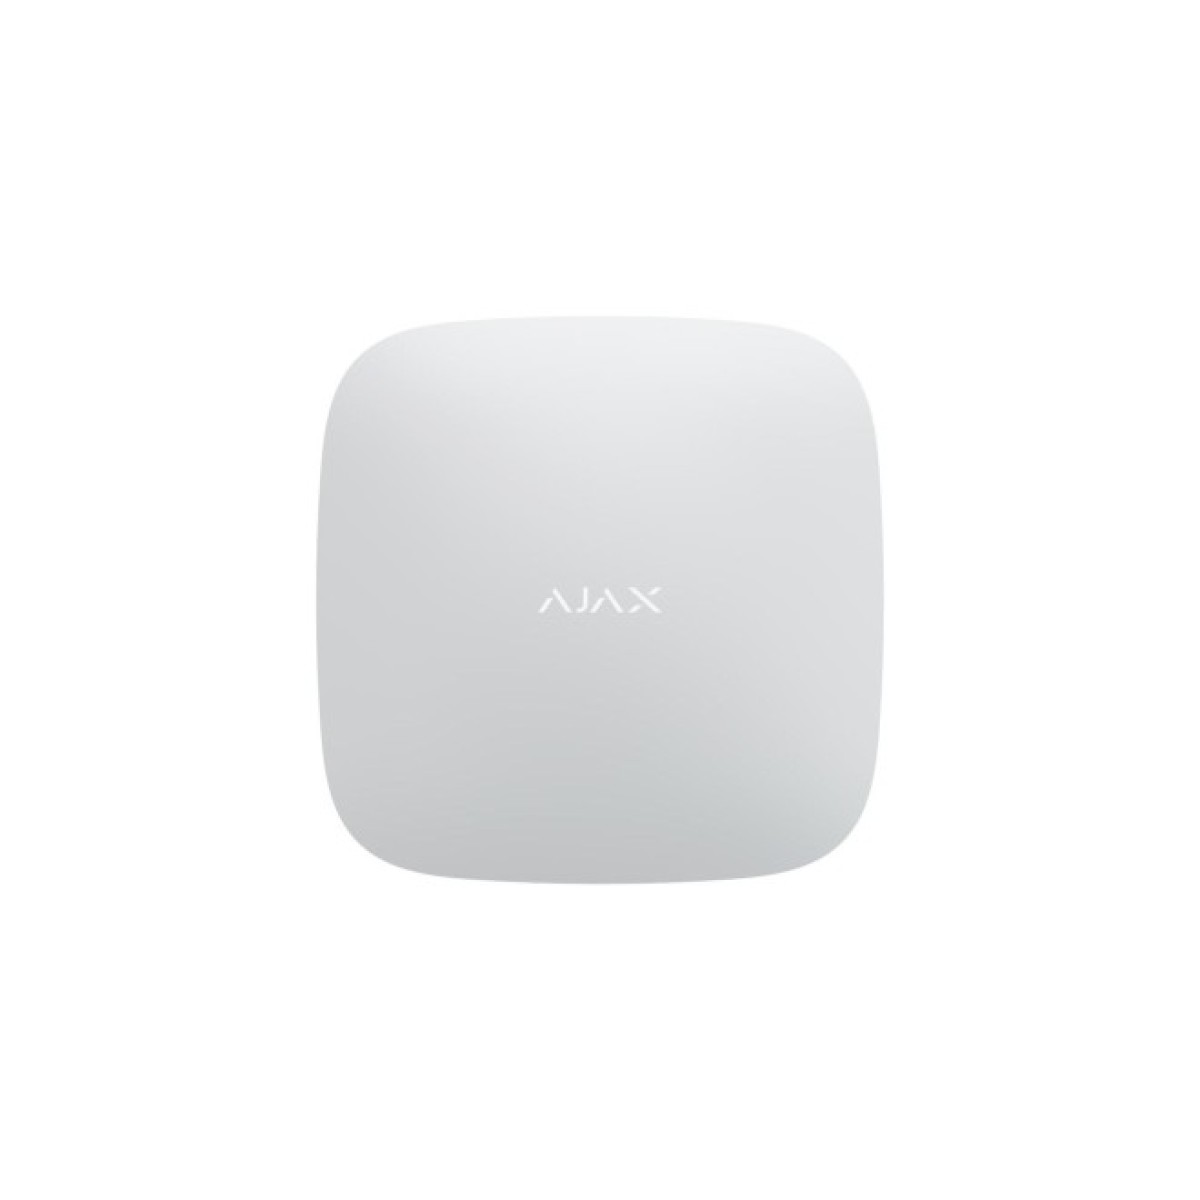 Модуль управления умным домом Ajax HUB /white (Hub /white) 256_256.jpg